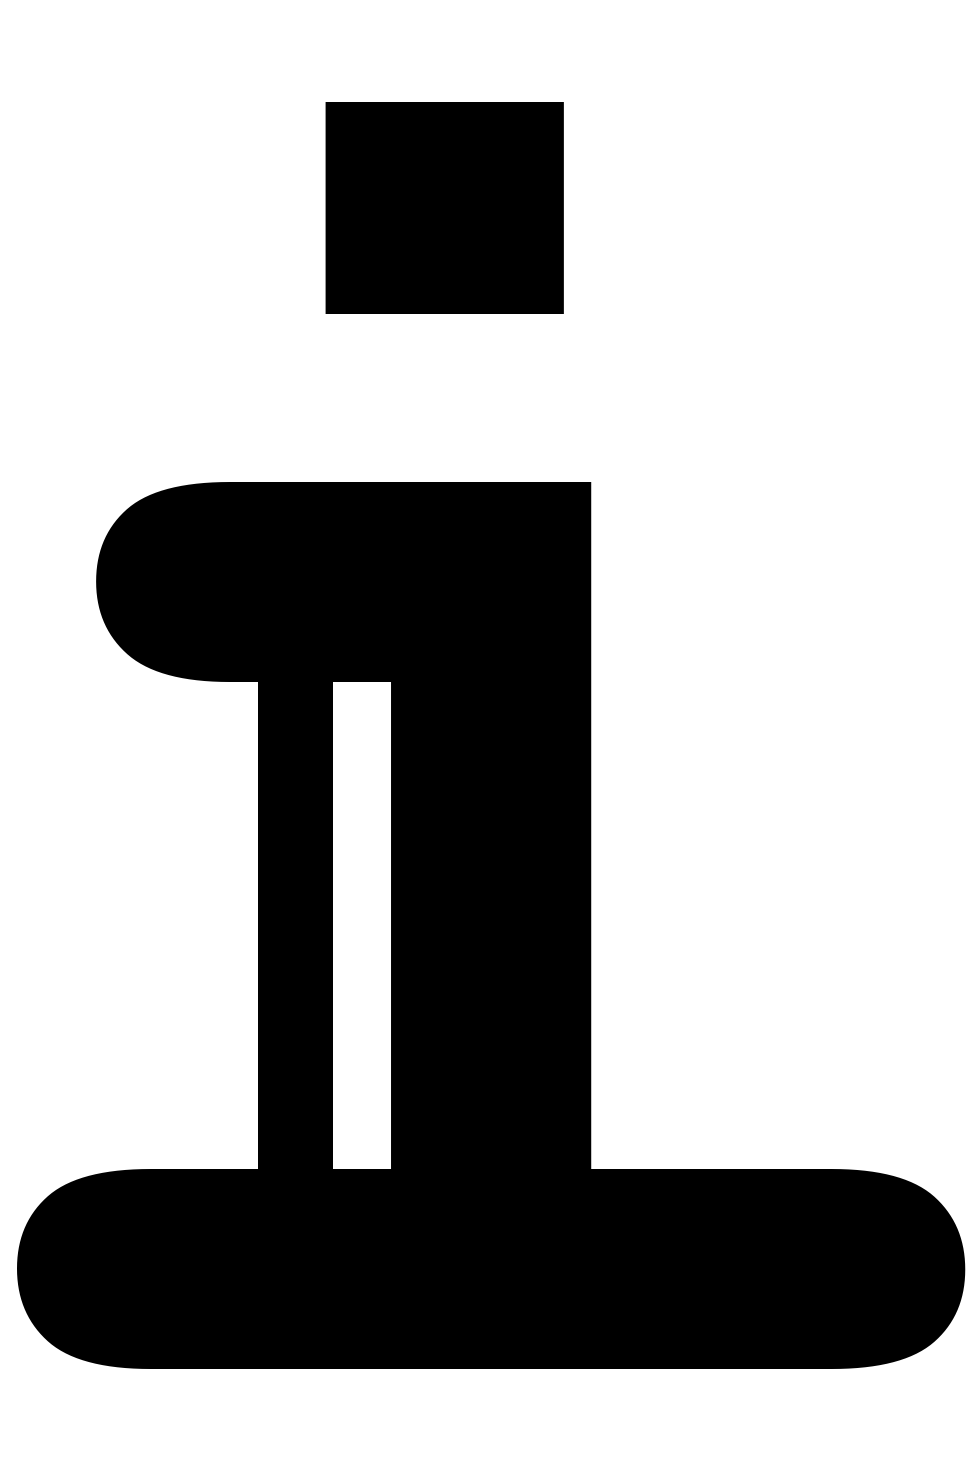 logo_infolab.png